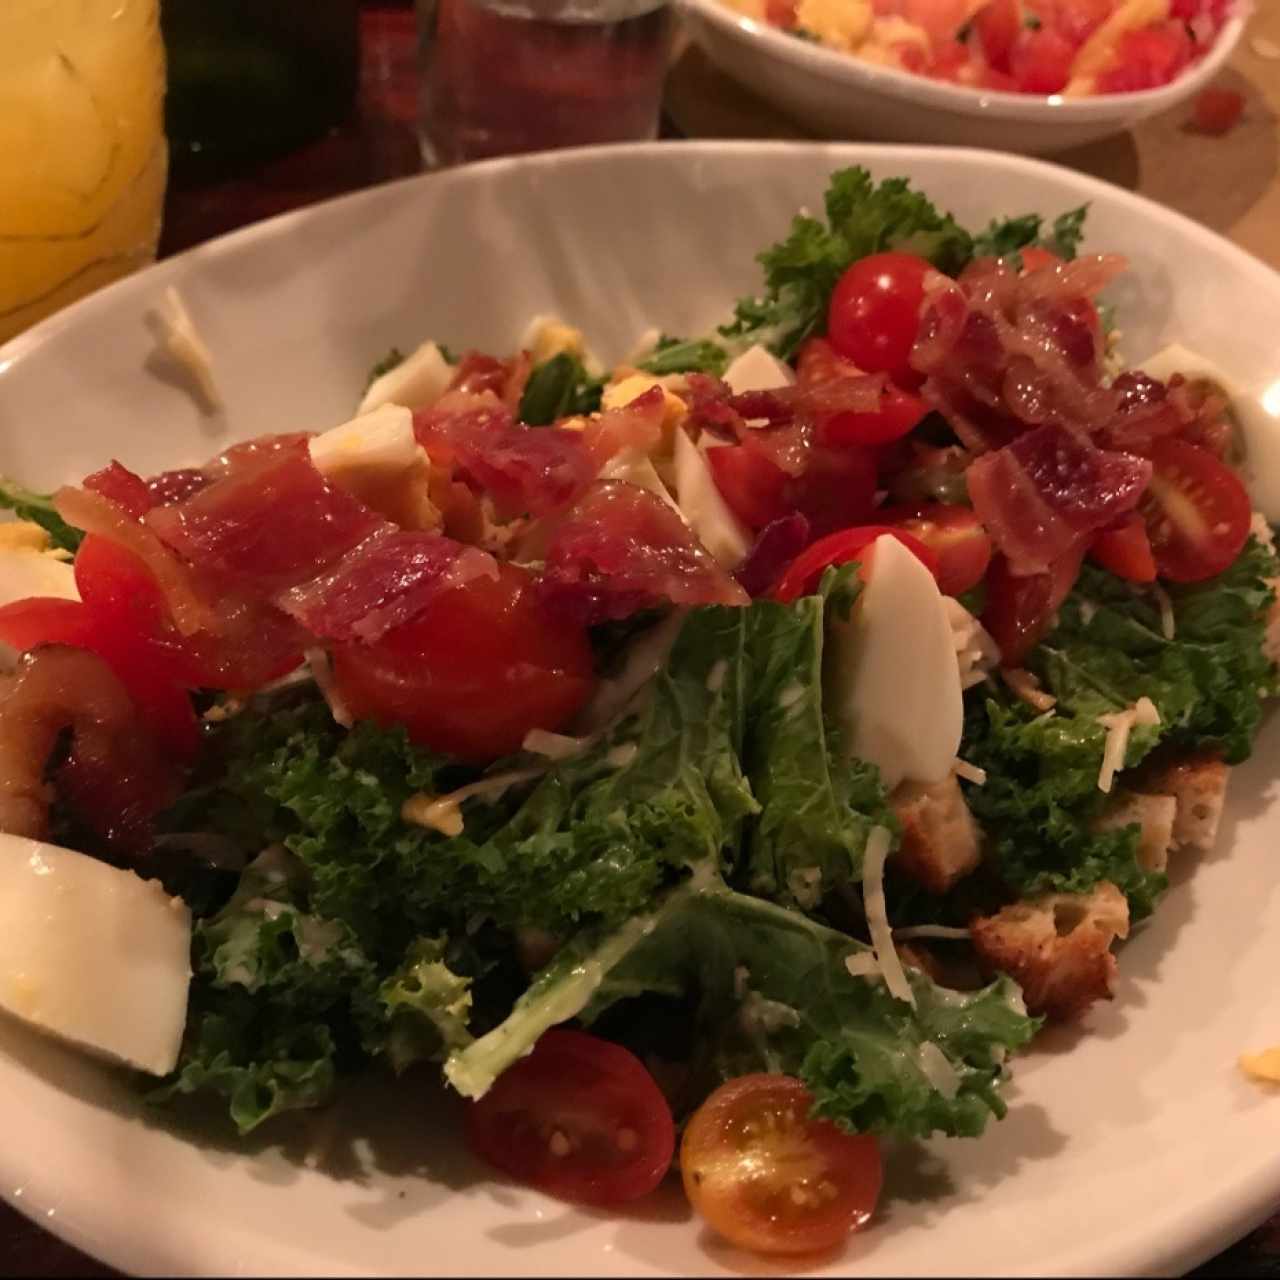 Ensalada - Kale caesar salad